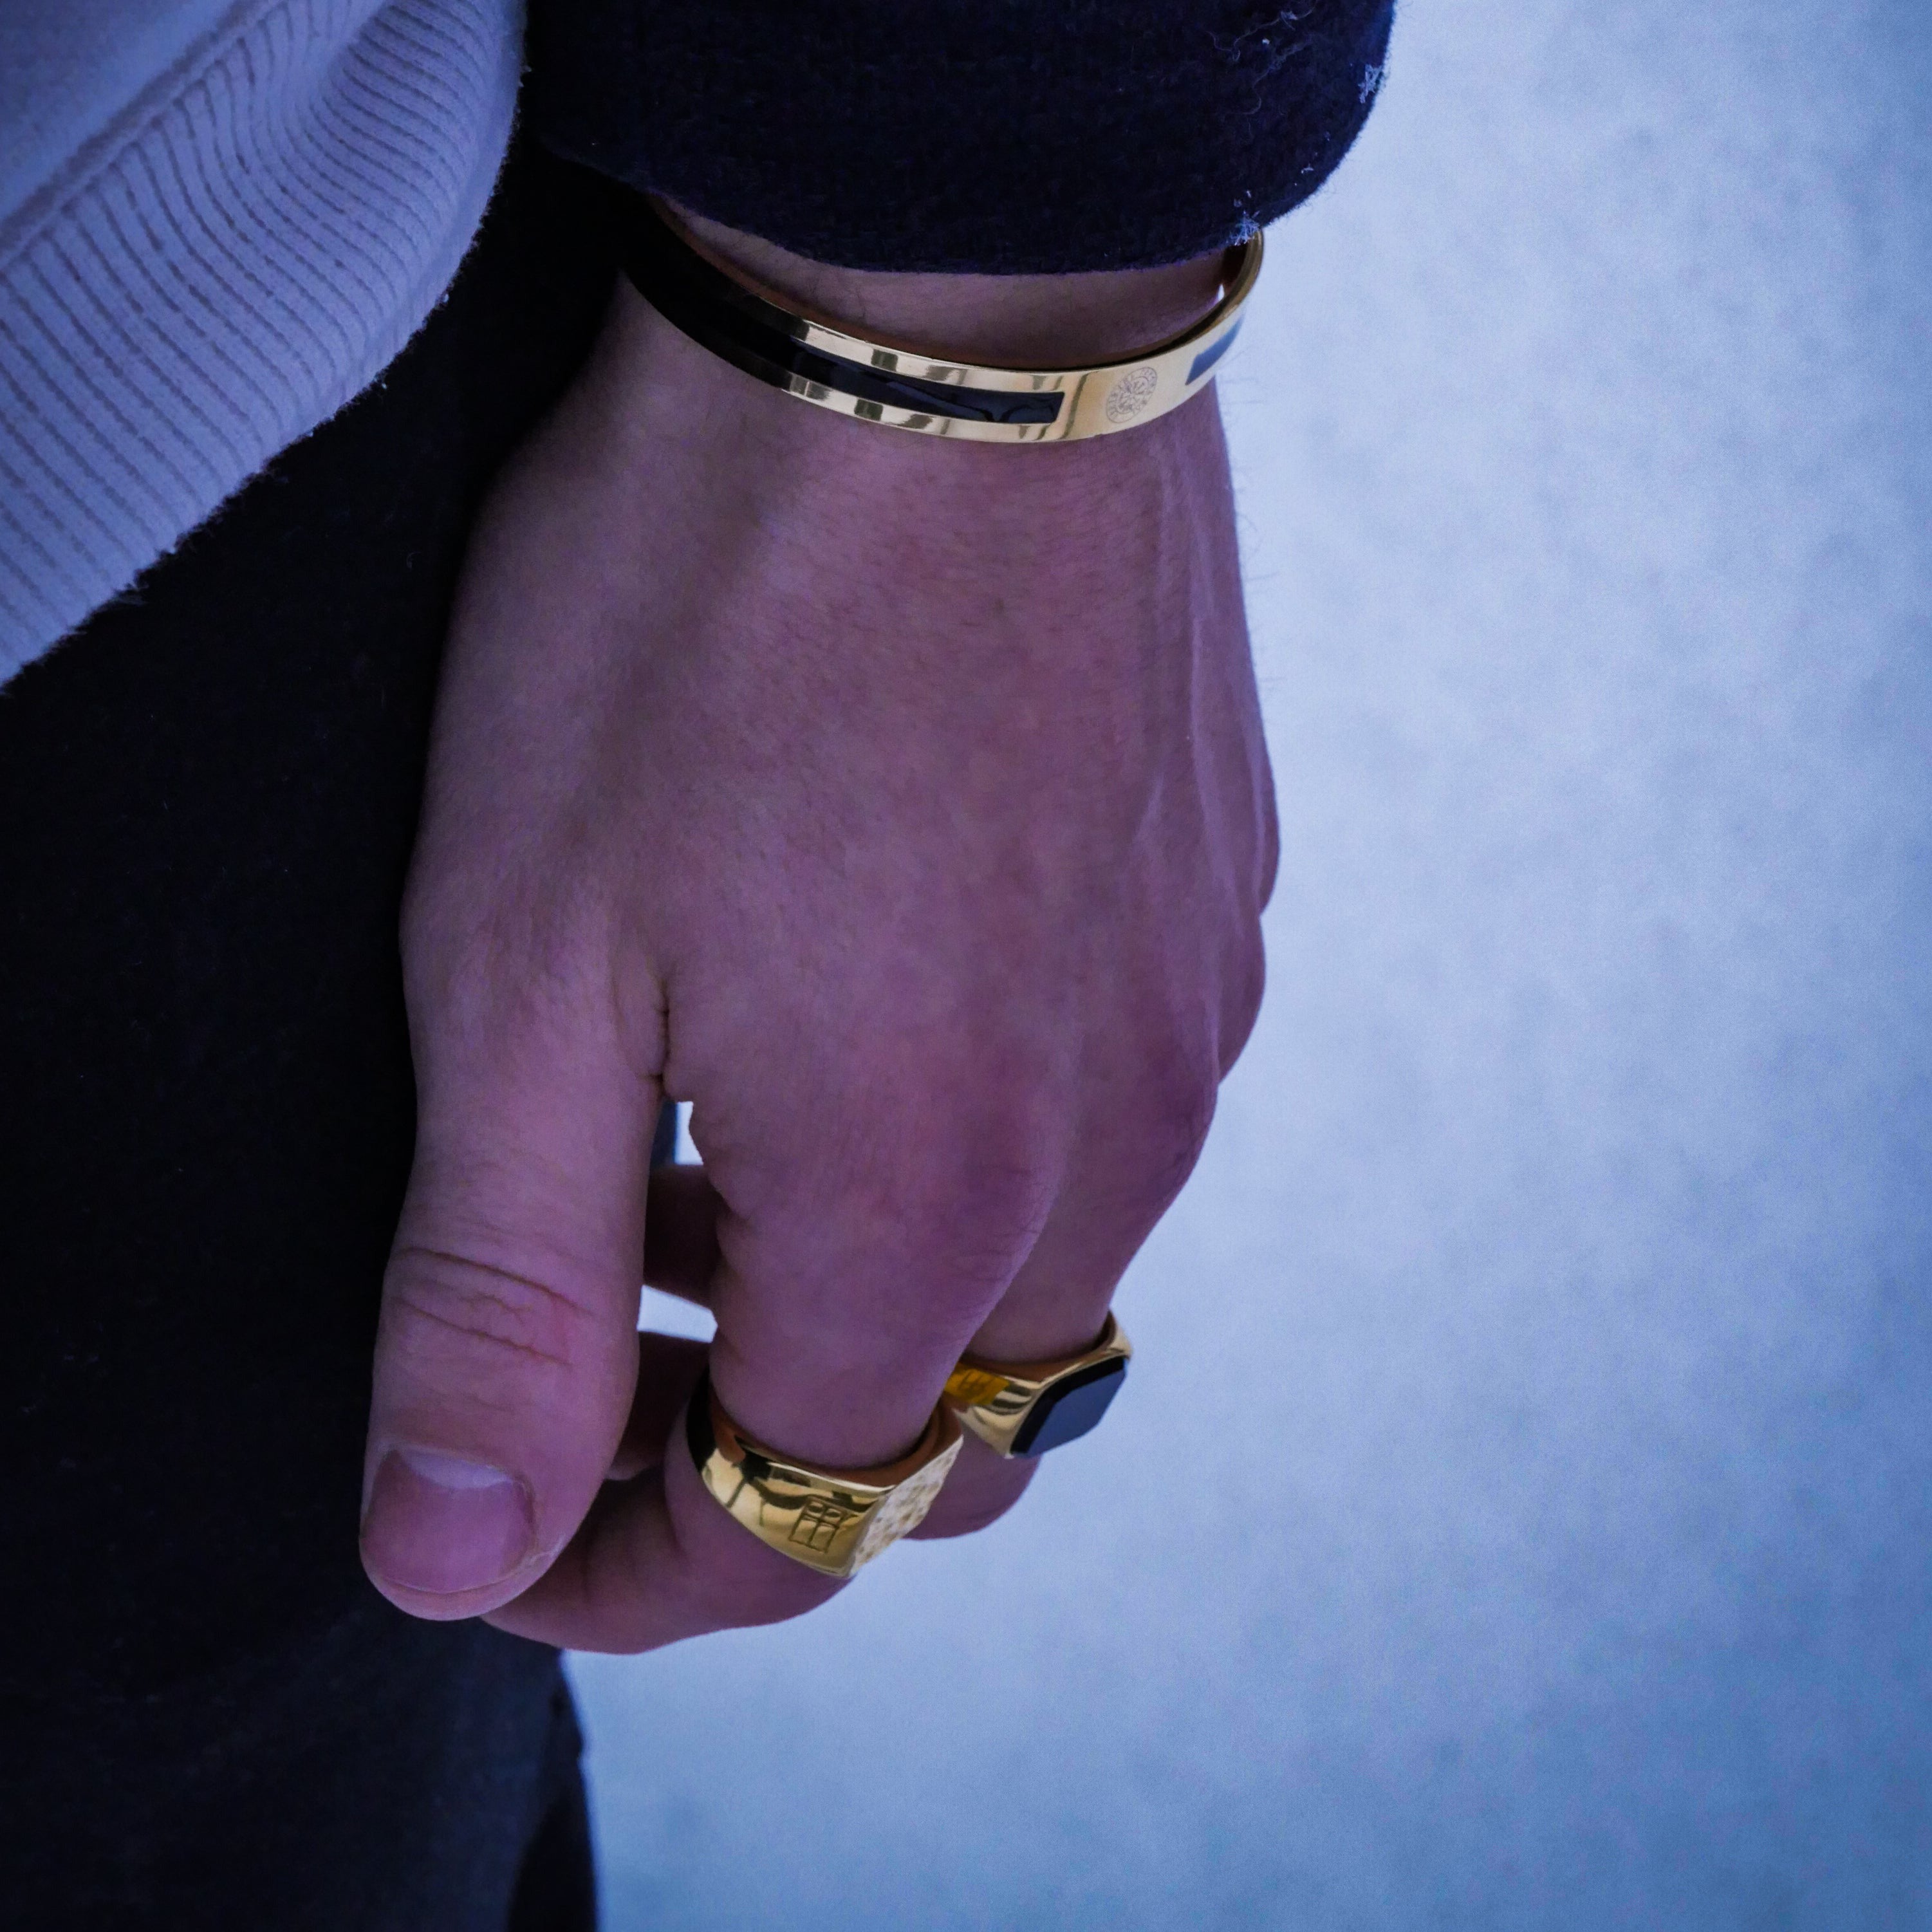 Thor Signature - Gold-toned ring